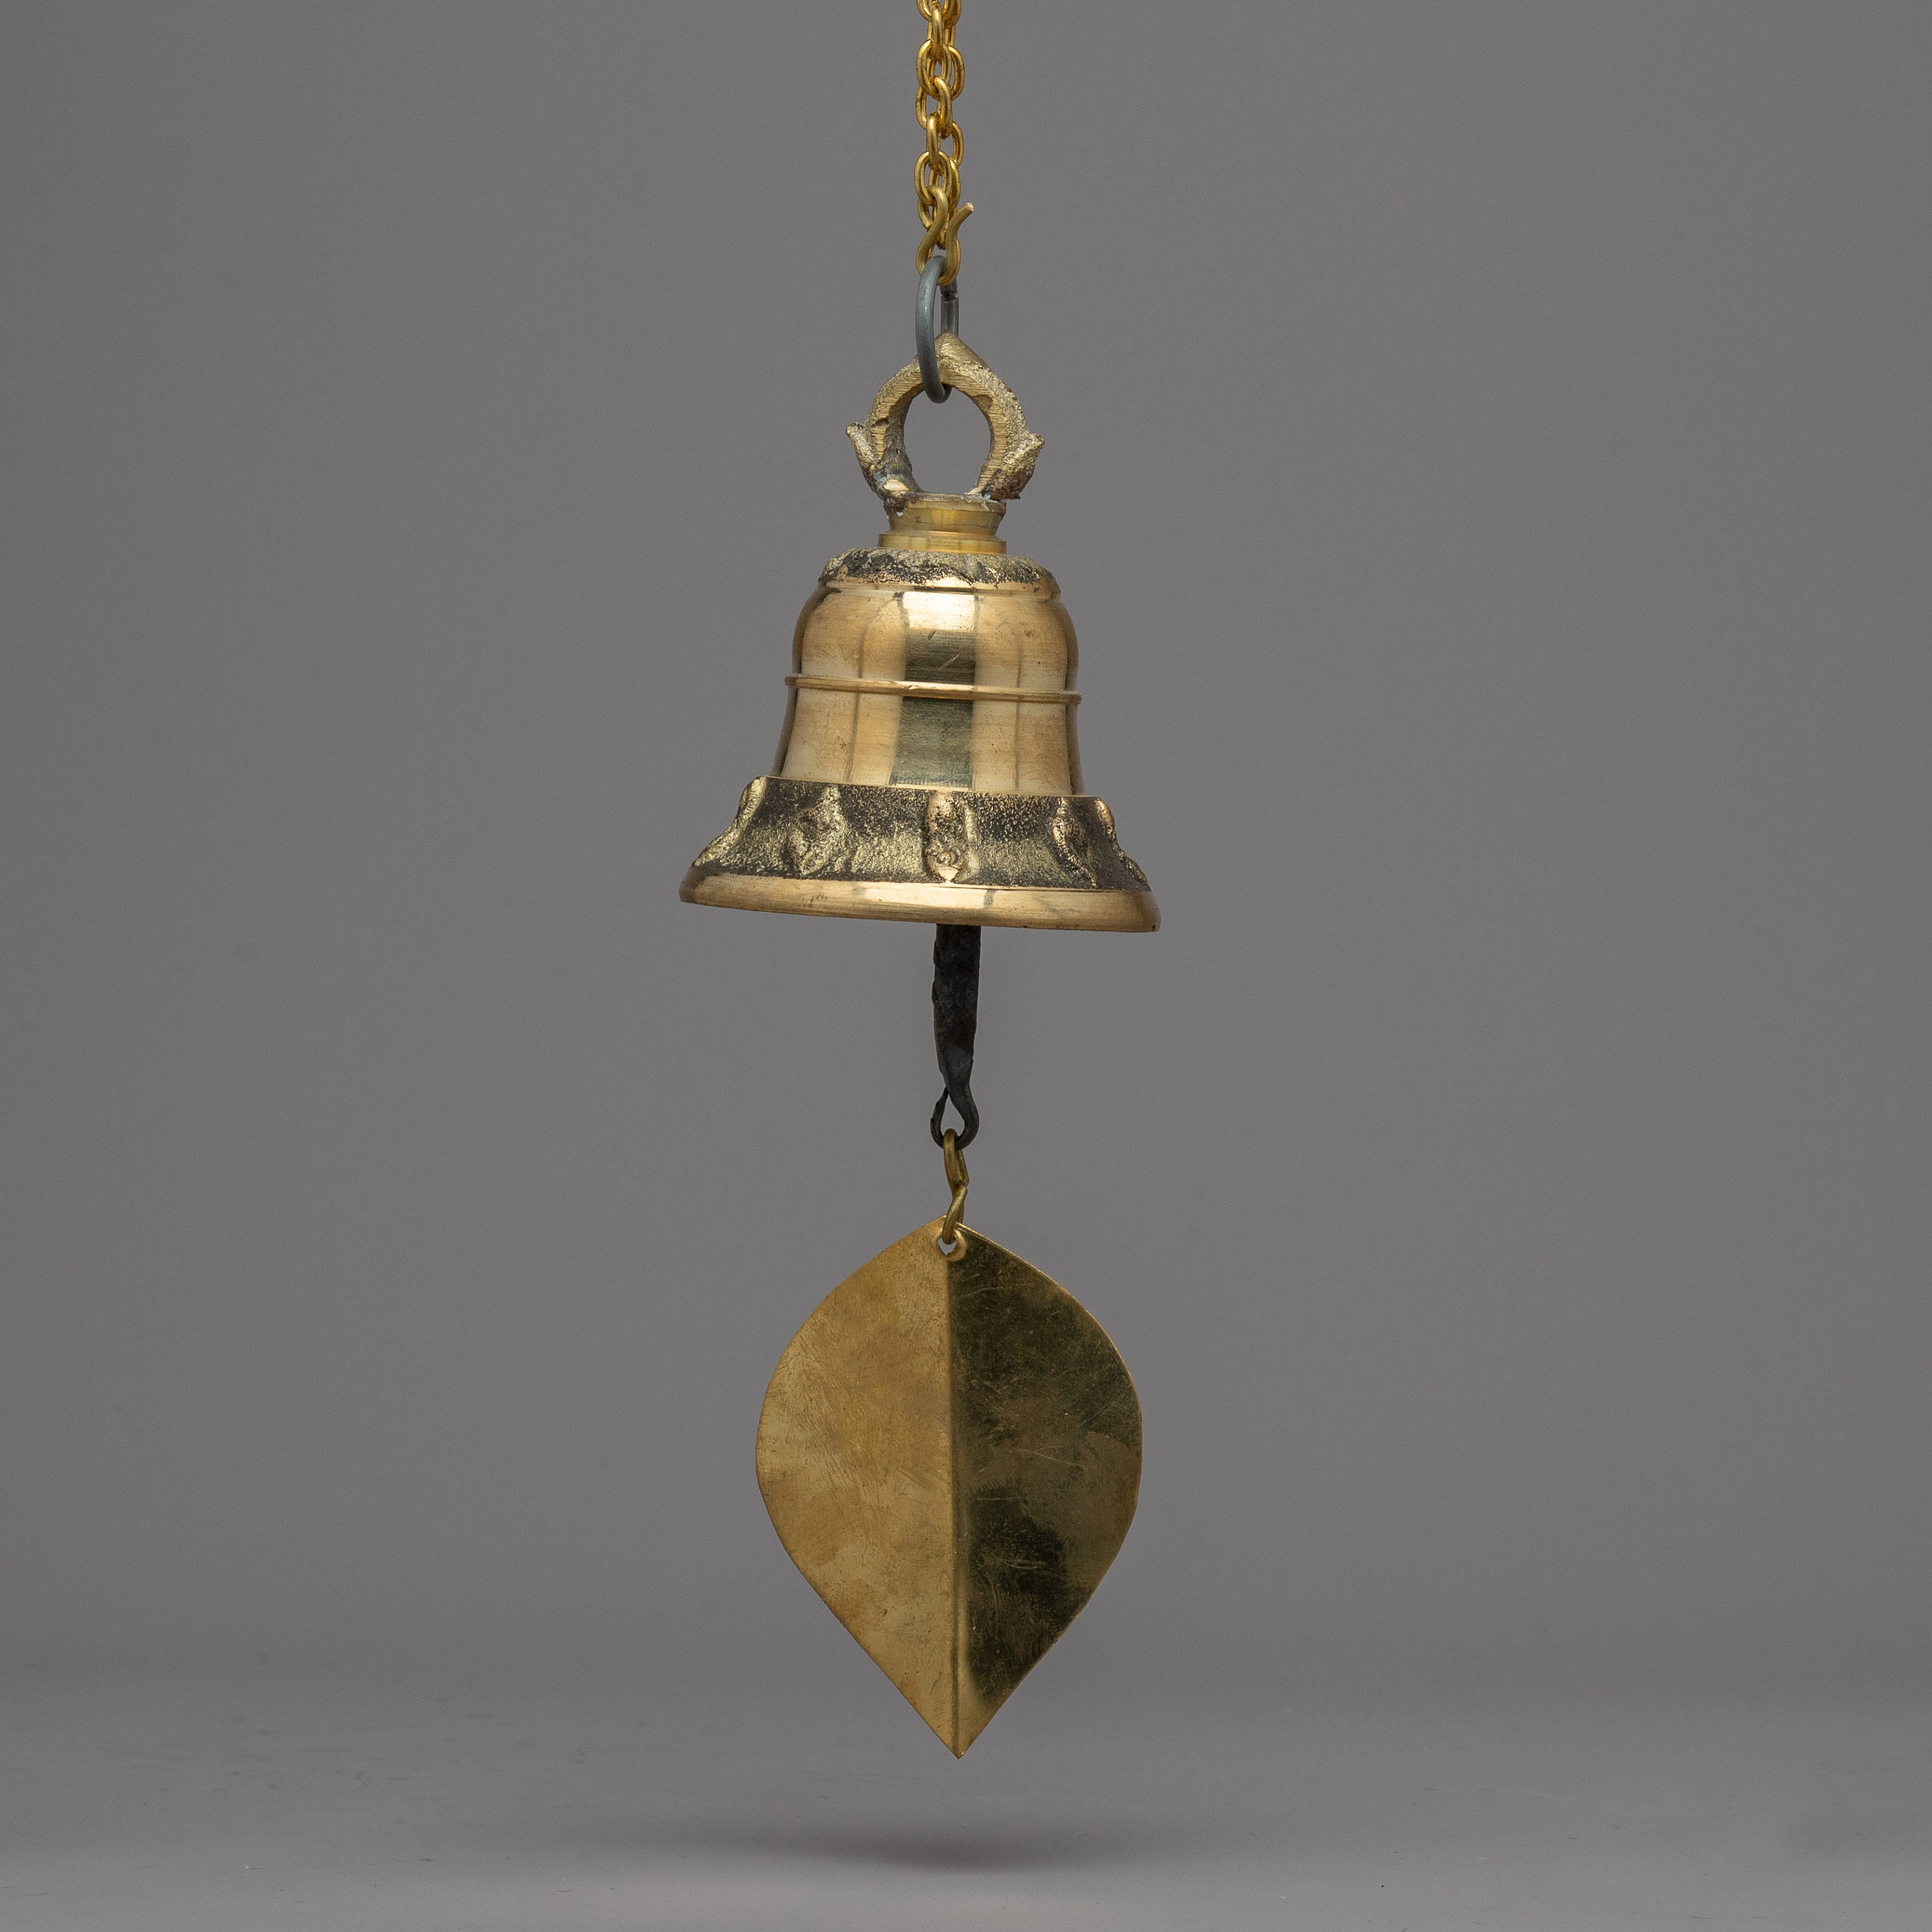 Antique Hanging Bell, Tibetan Decoration Bell